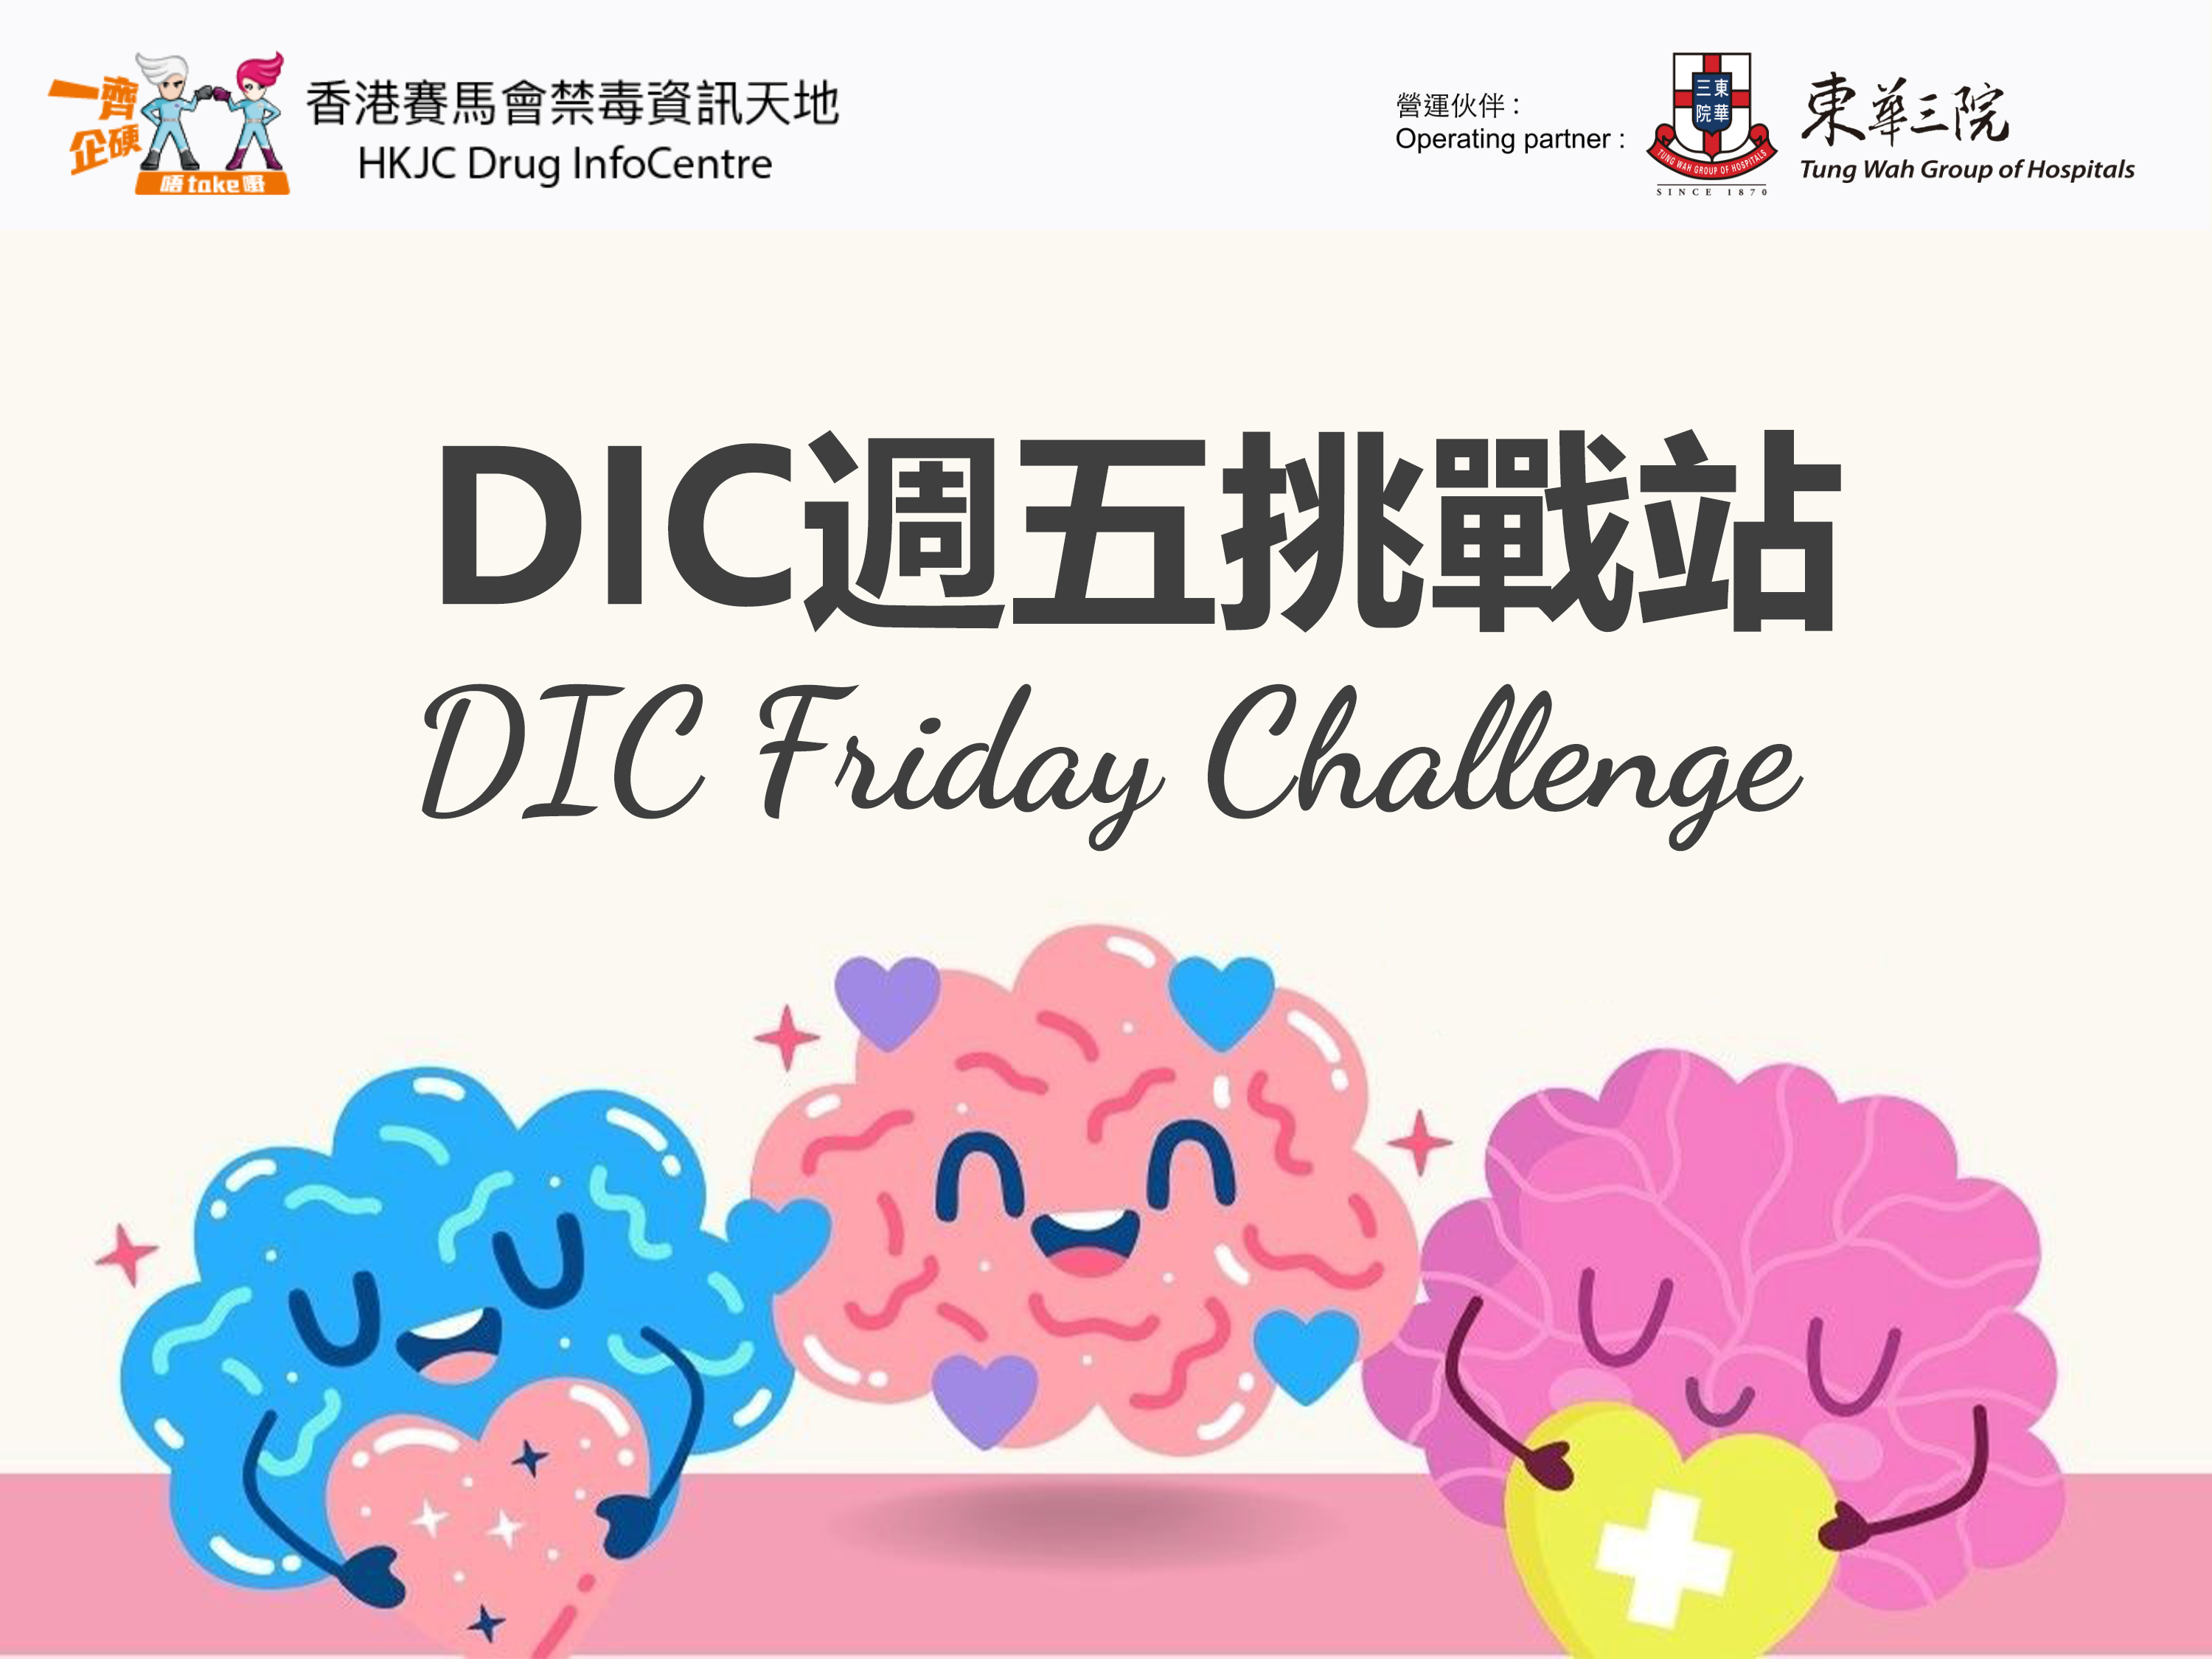 DIC Friday Challenge